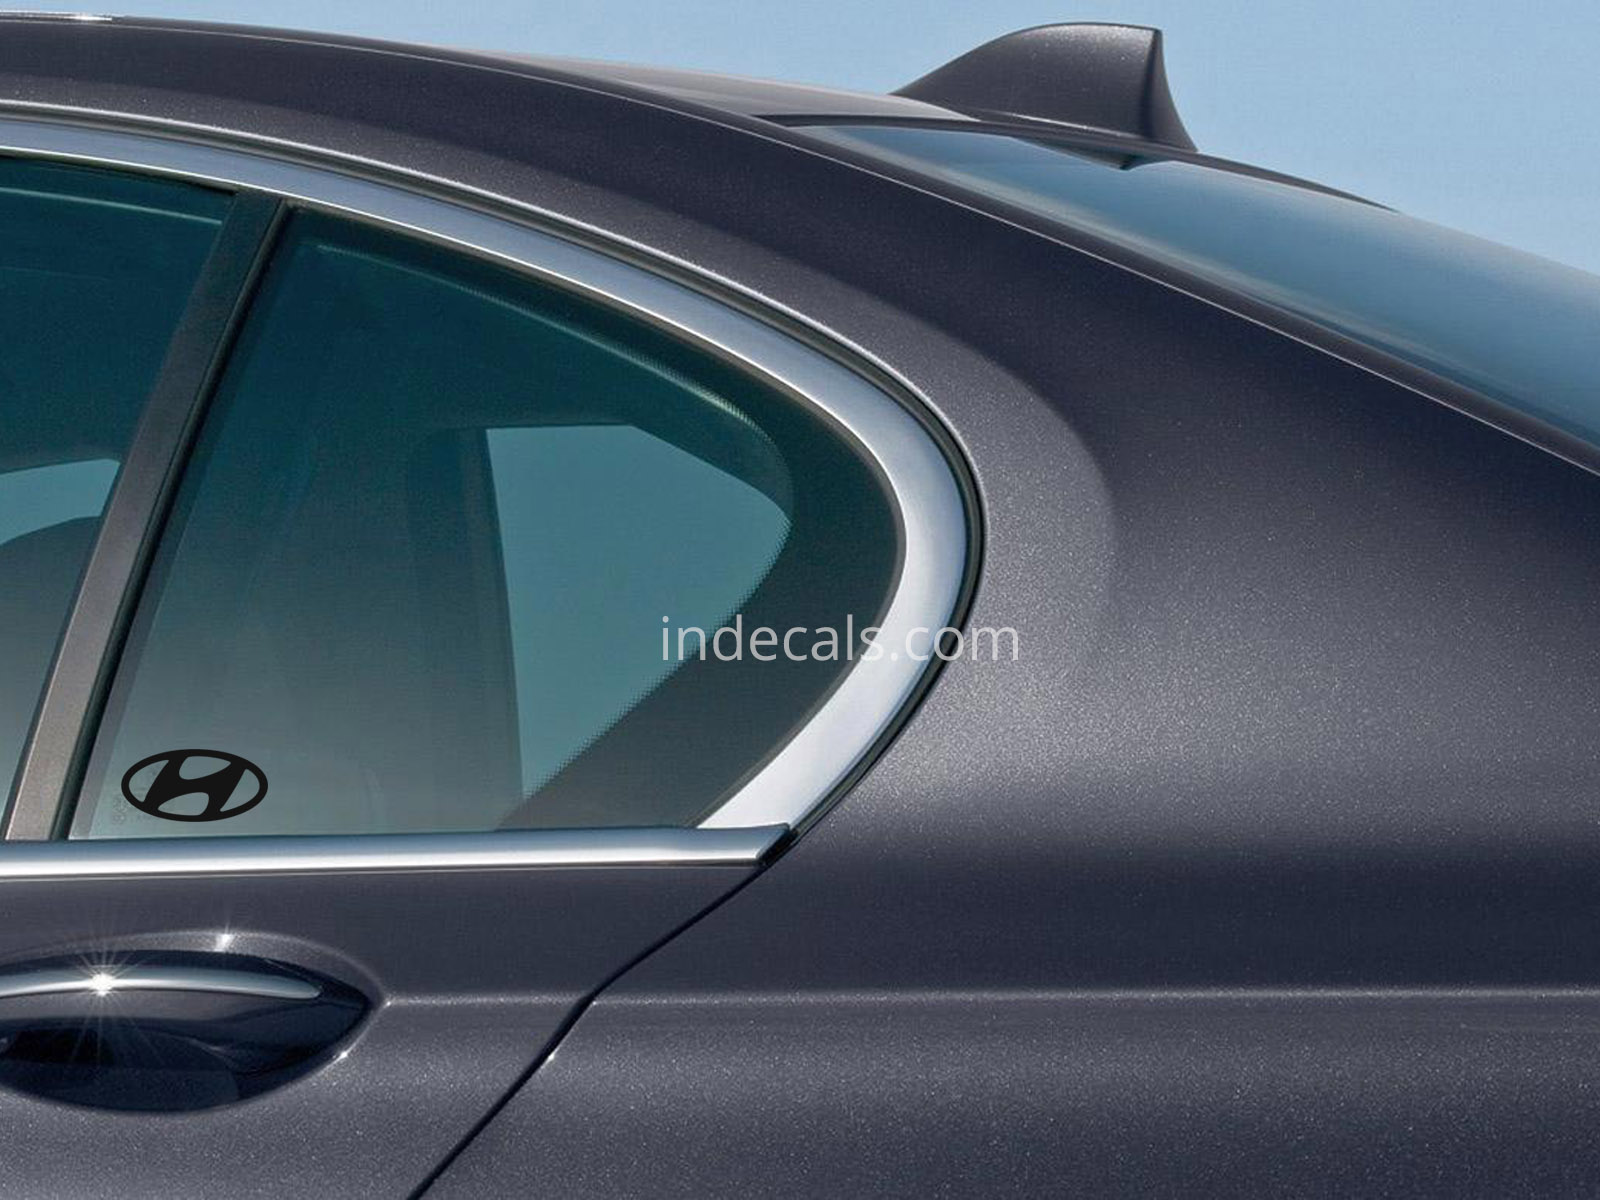 3 x Hyundai Stickers for Rear Window - Black